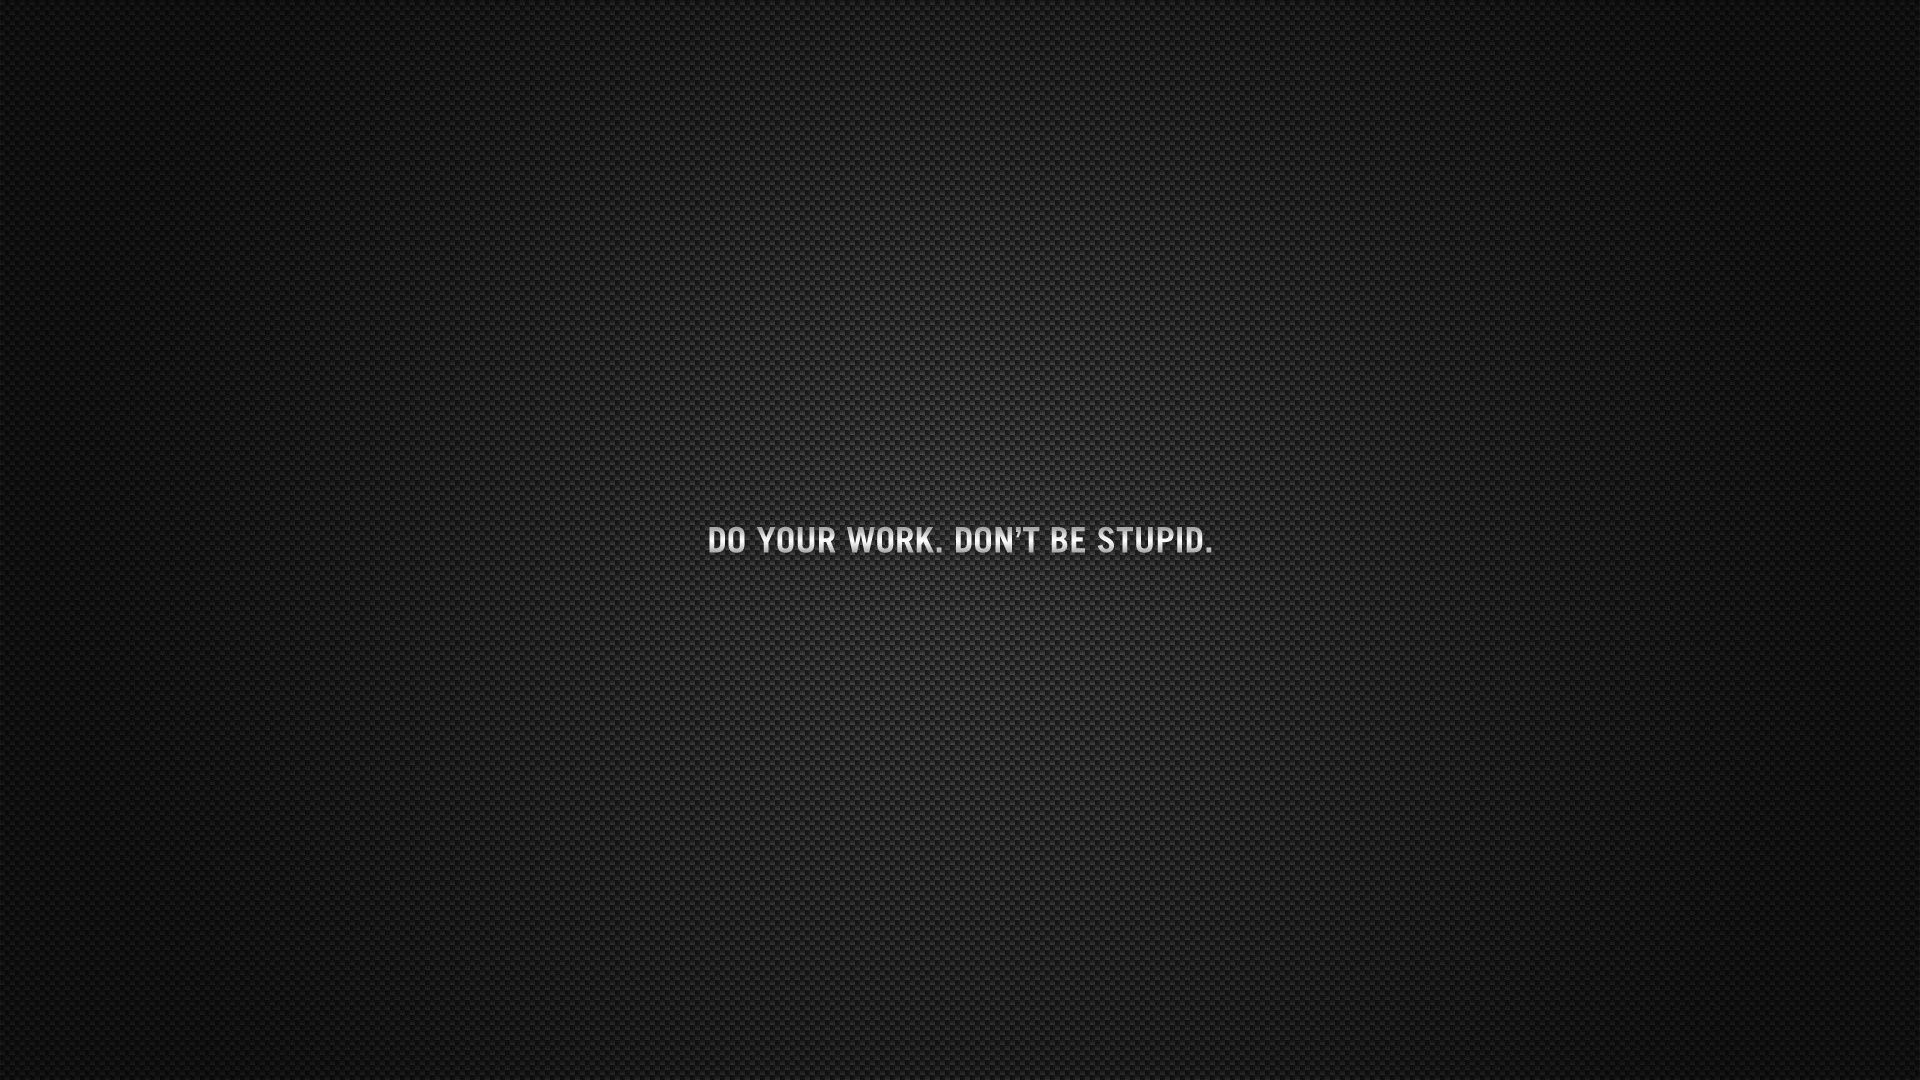 Do Your Work Quote desktop wallpaper and. Inspirational quotes wallpaper, Work quotes, Life quotes wallpaper